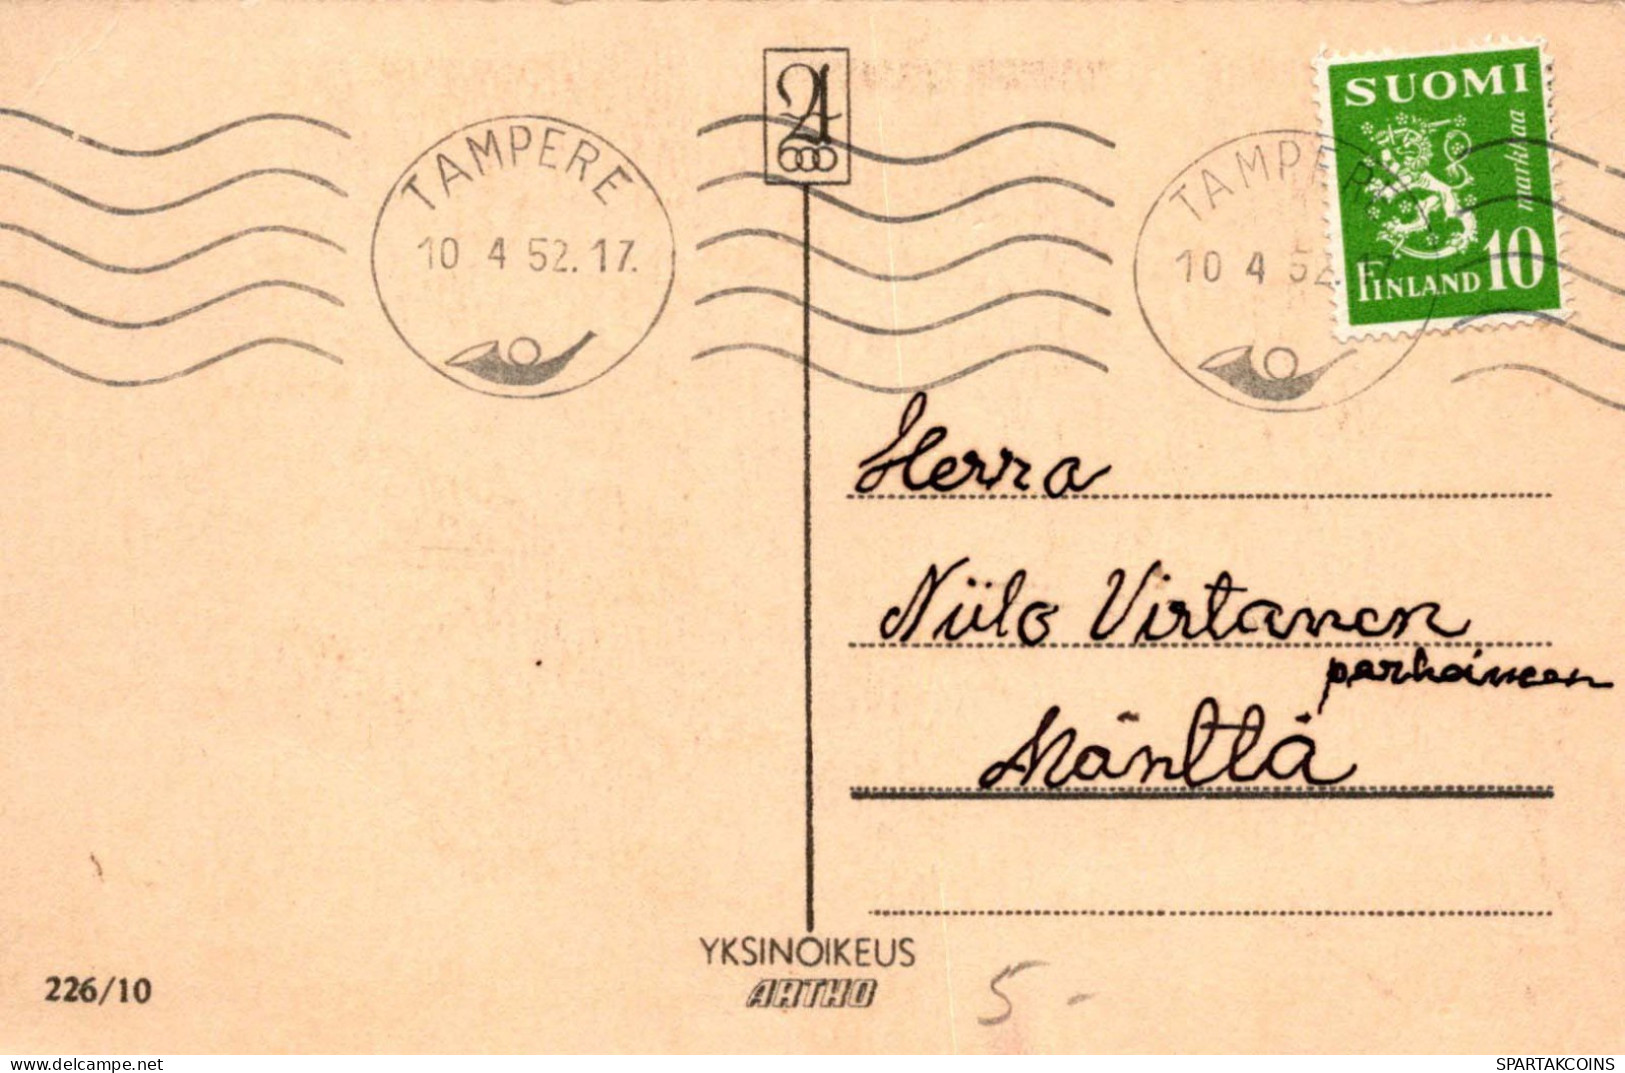 PÂQUES LAPIN ŒUF Vintage Carte Postale CPA #PKE241.FR - Ostern